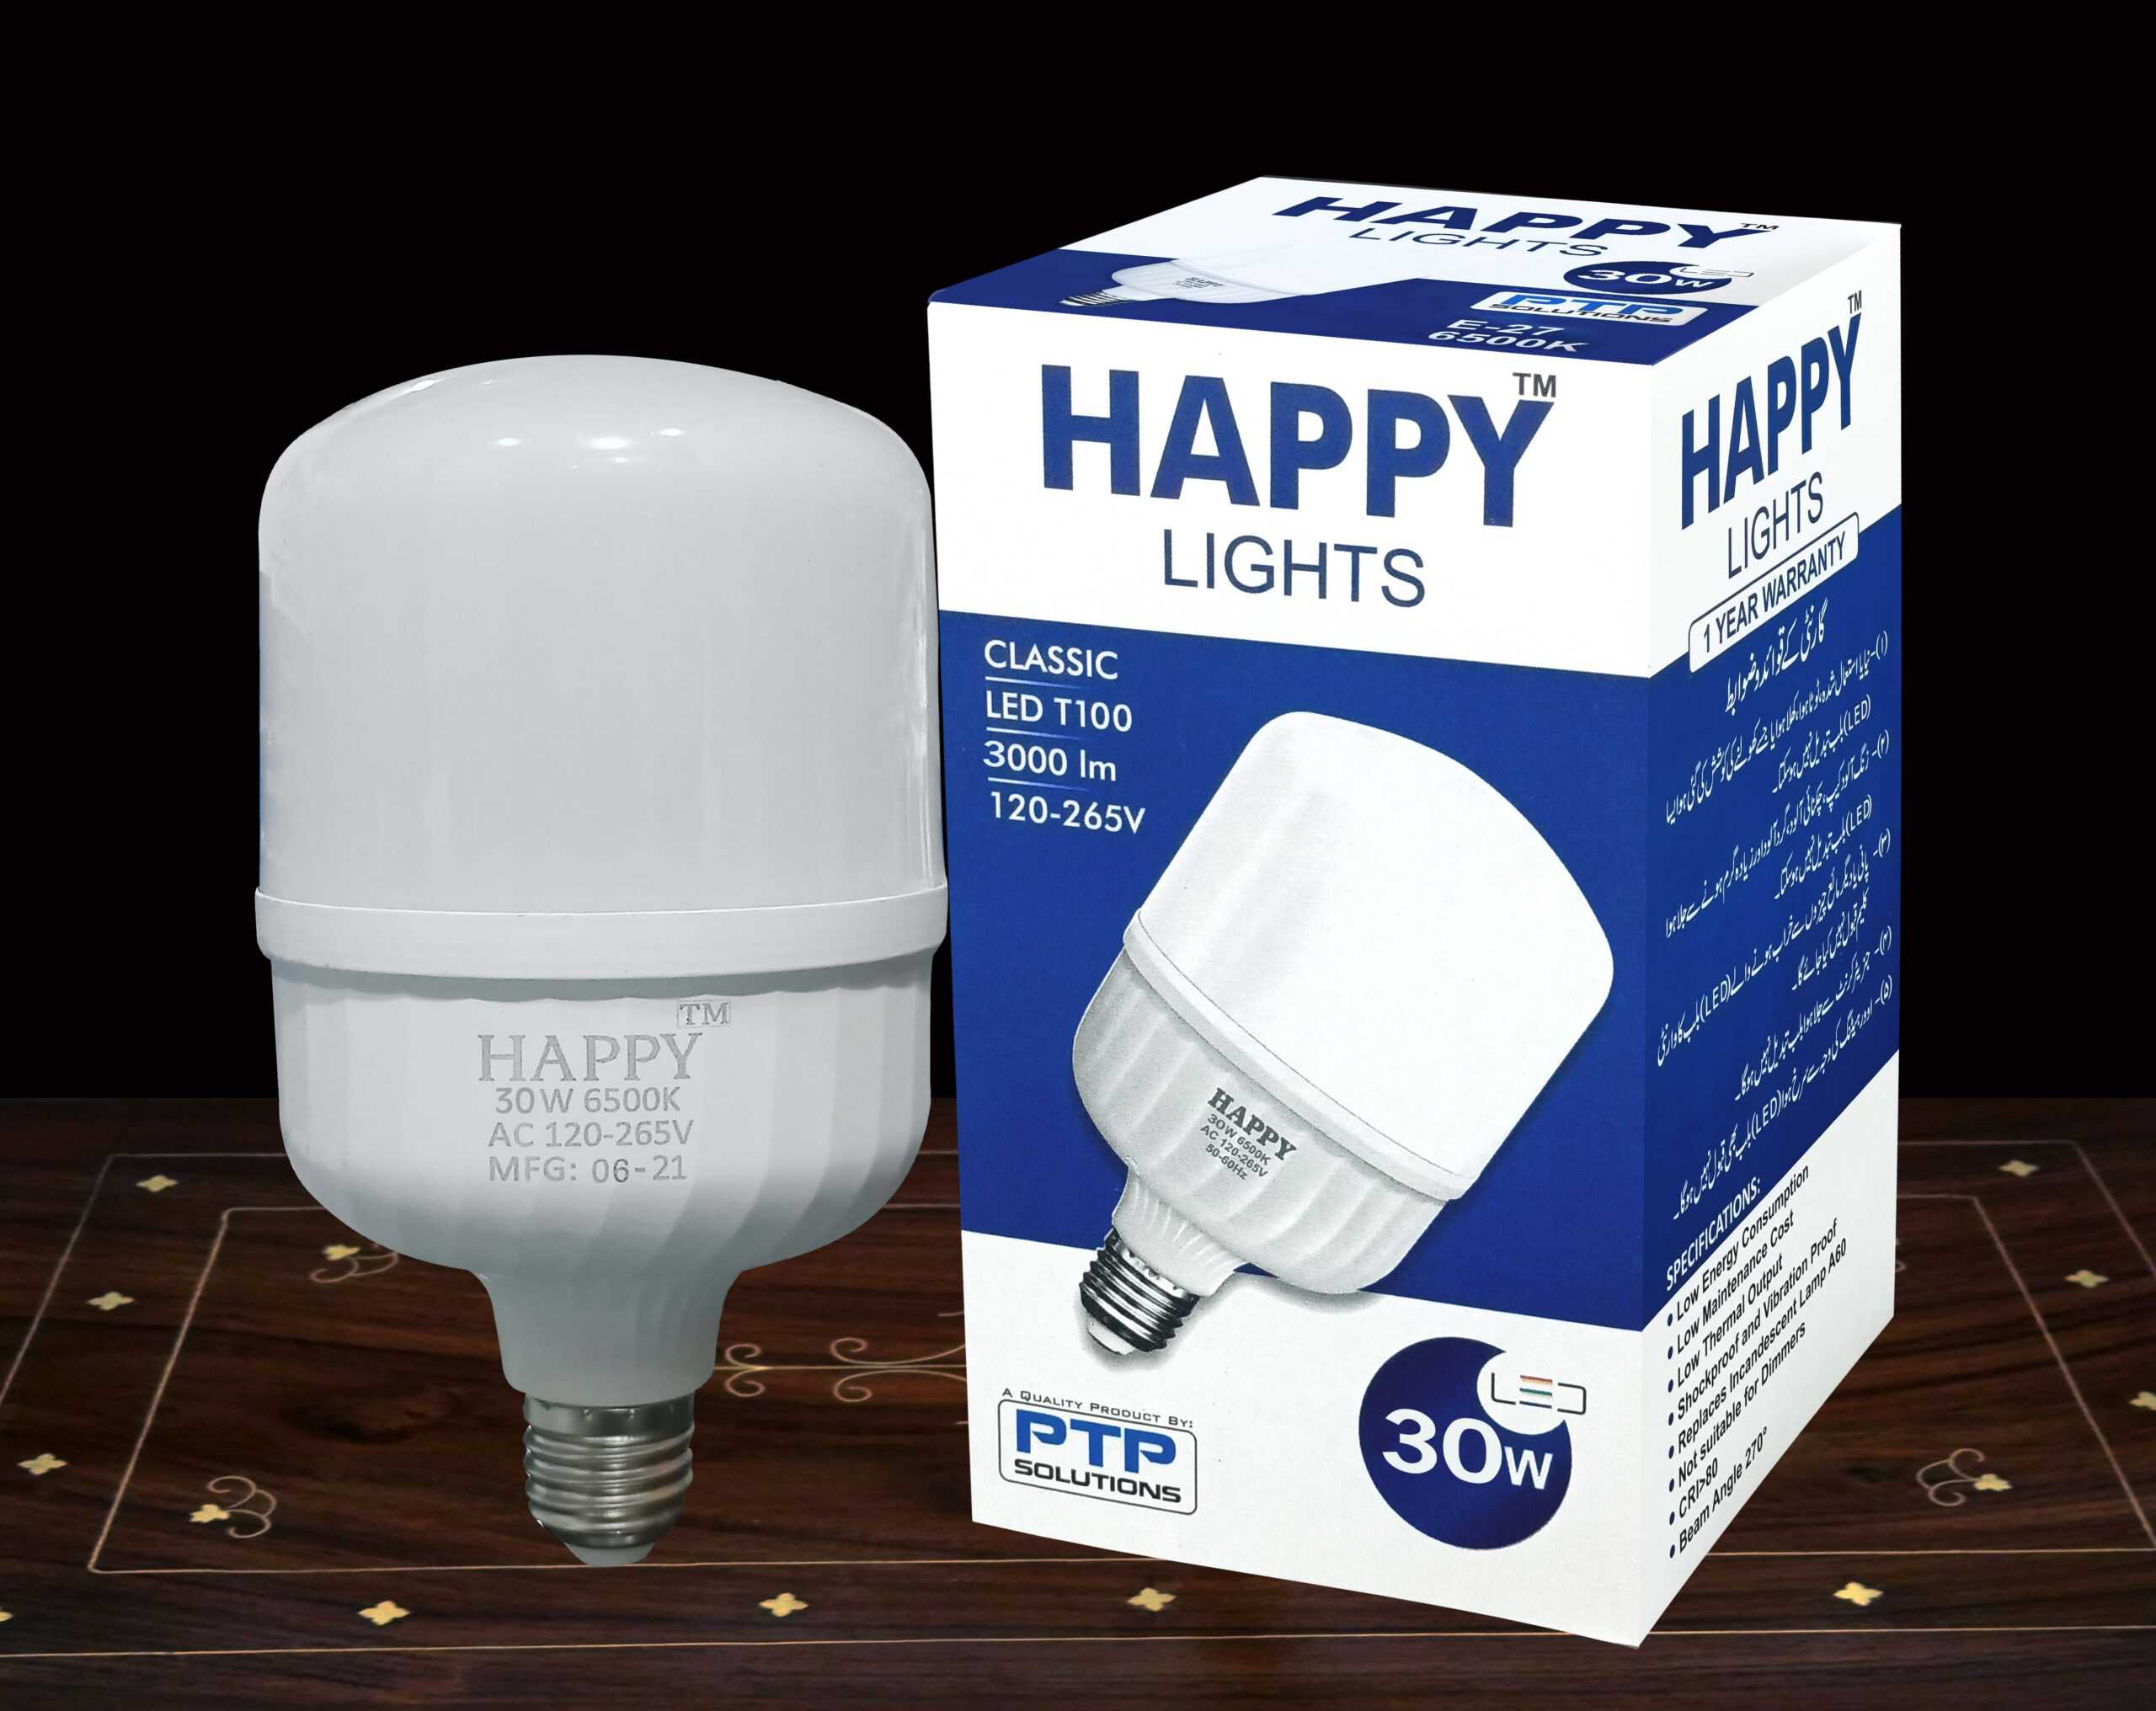 30 WAAT LED Bulb Price in Pakistan | My Happy Store